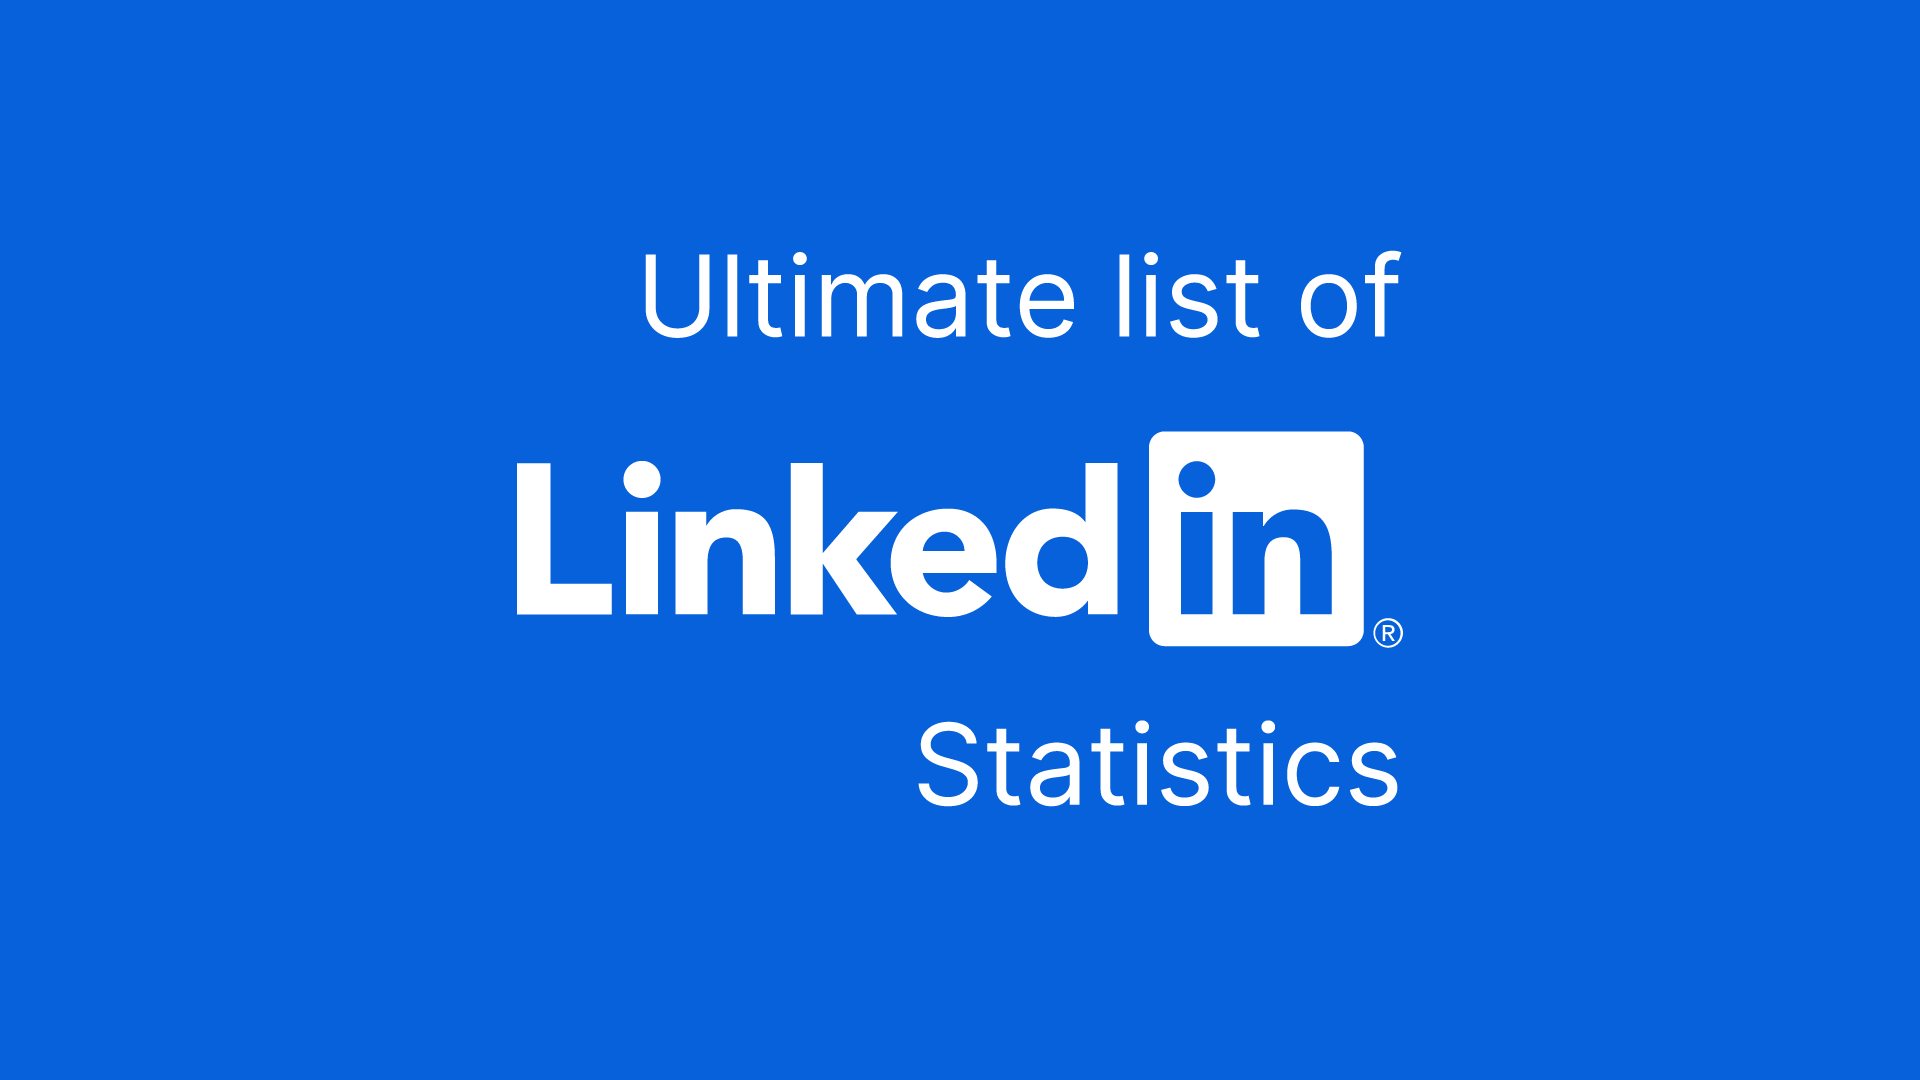 LinkedIn statistics cover